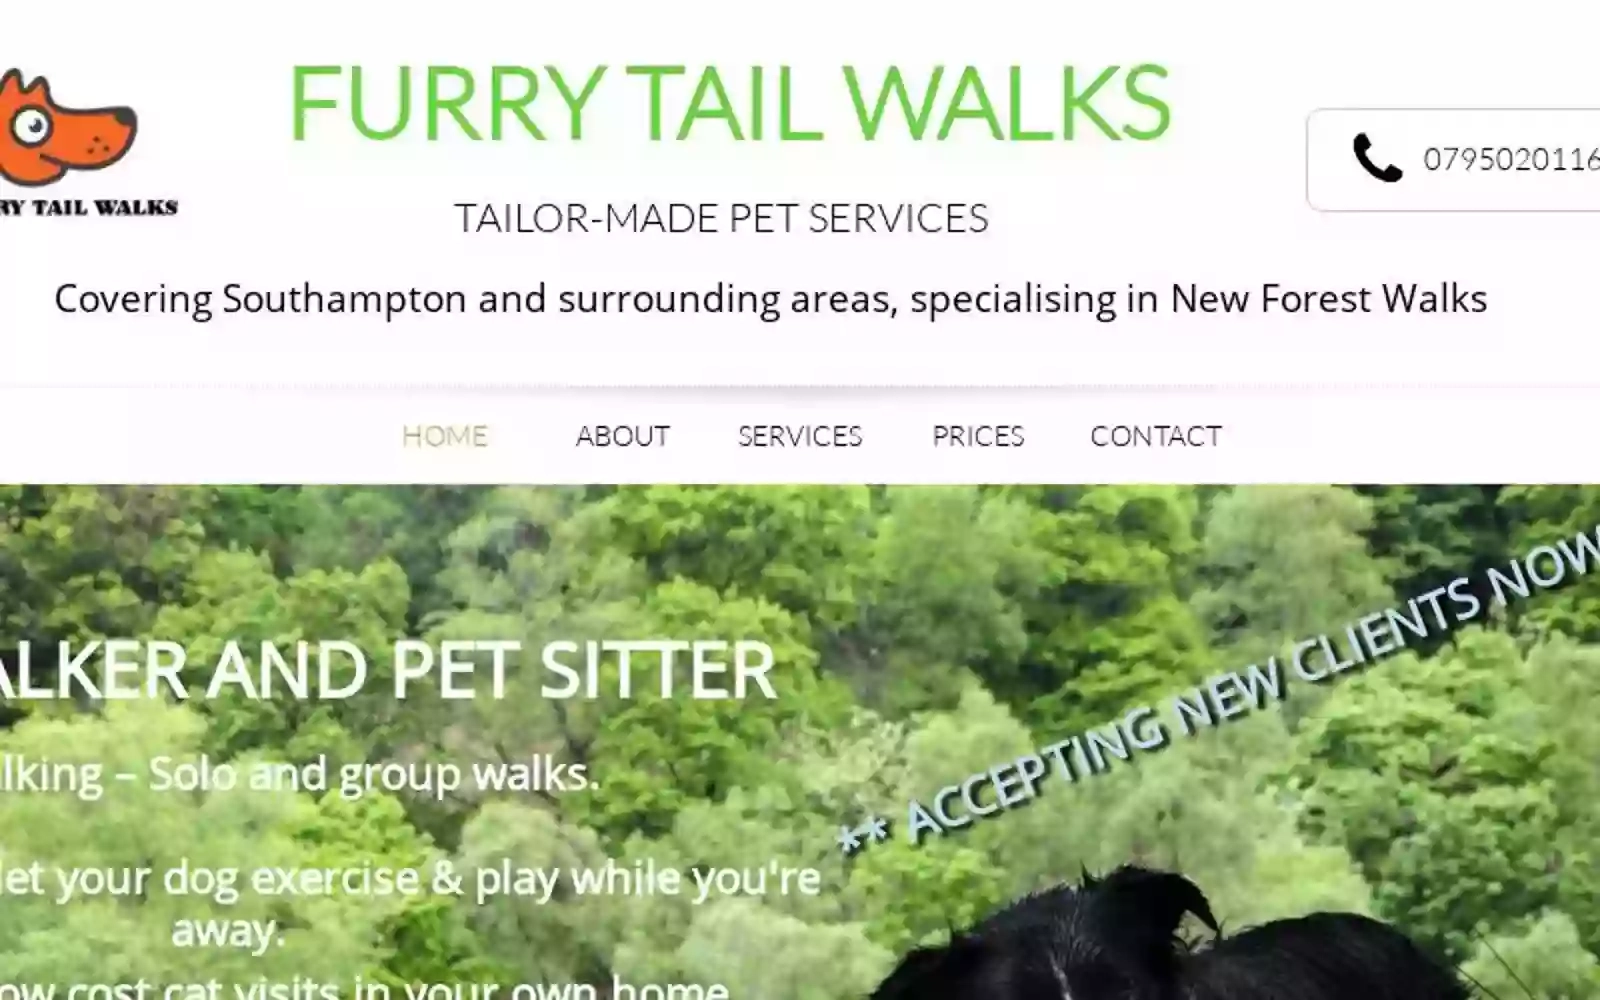 Furry Tail Walks Dog Walker and Pet Sitter Southampton